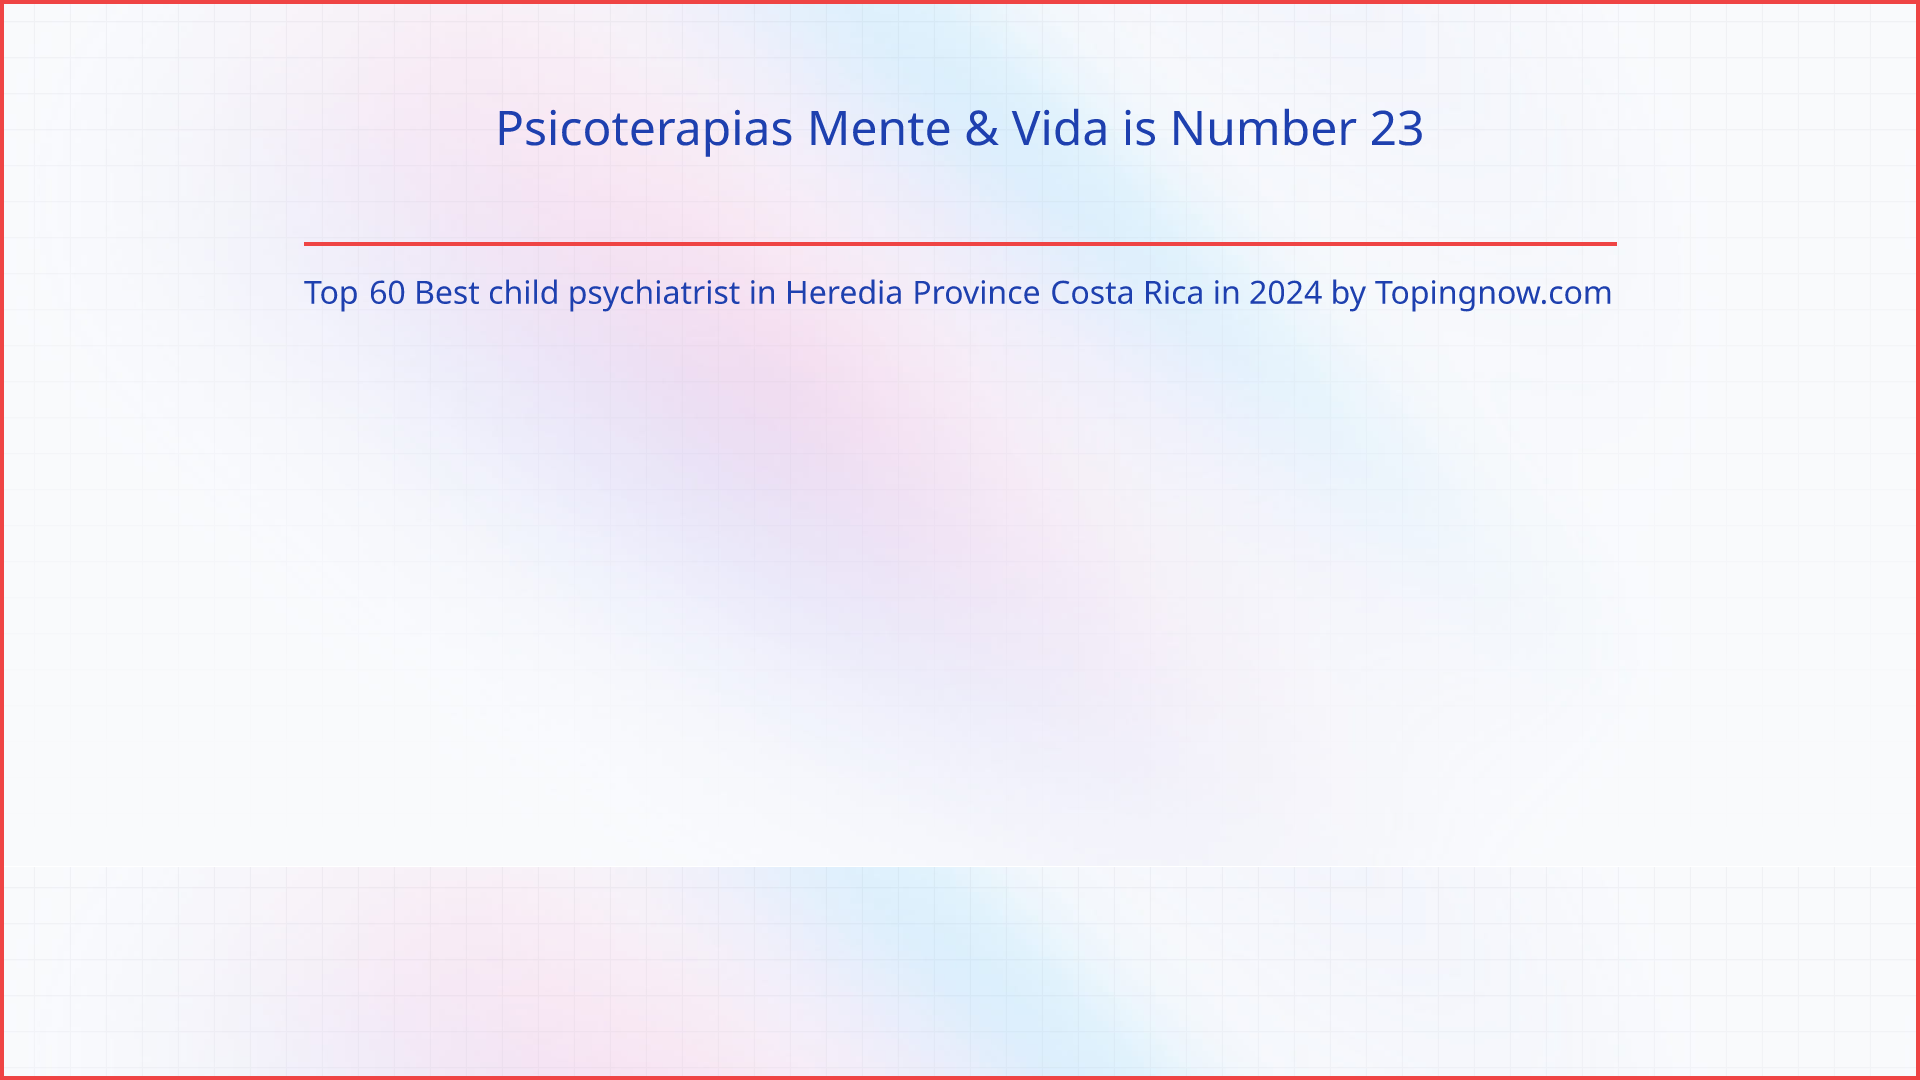 Psicoterapias Mente & Vida: Top 60 Best child psychiatrist in Heredia Province Costa Rica in 2024